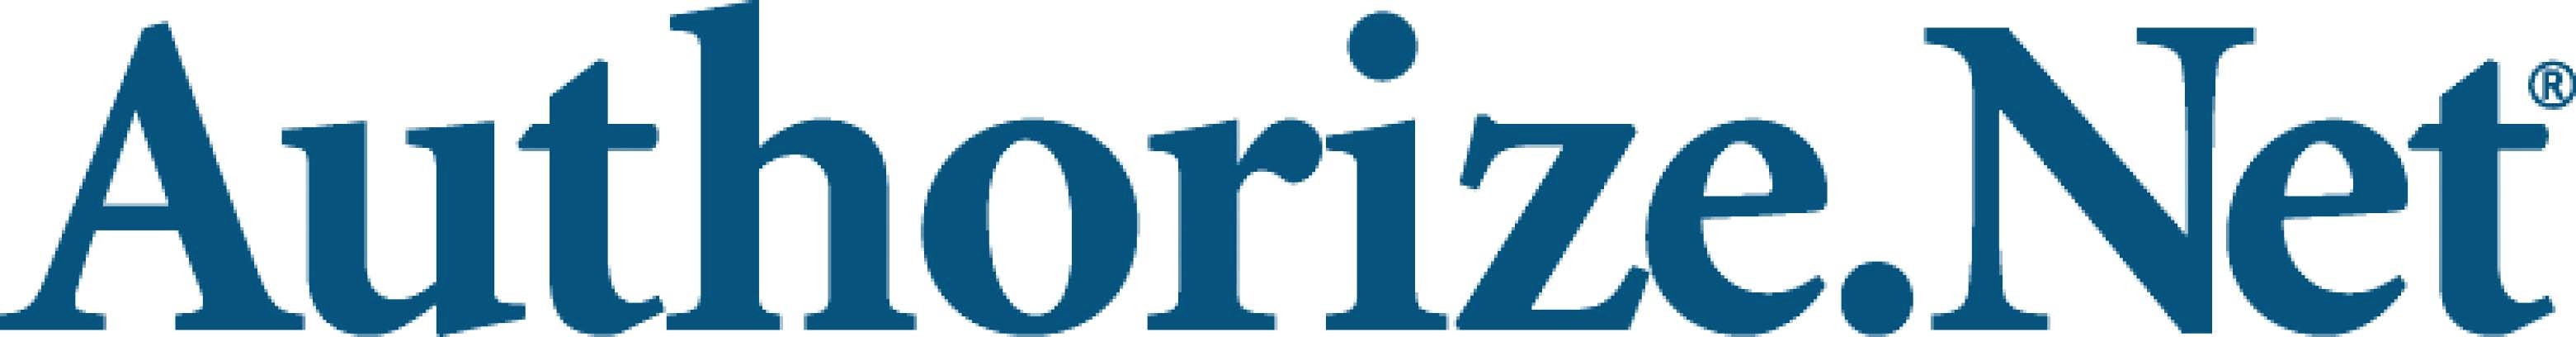 Authorize.net-Logo.jpg